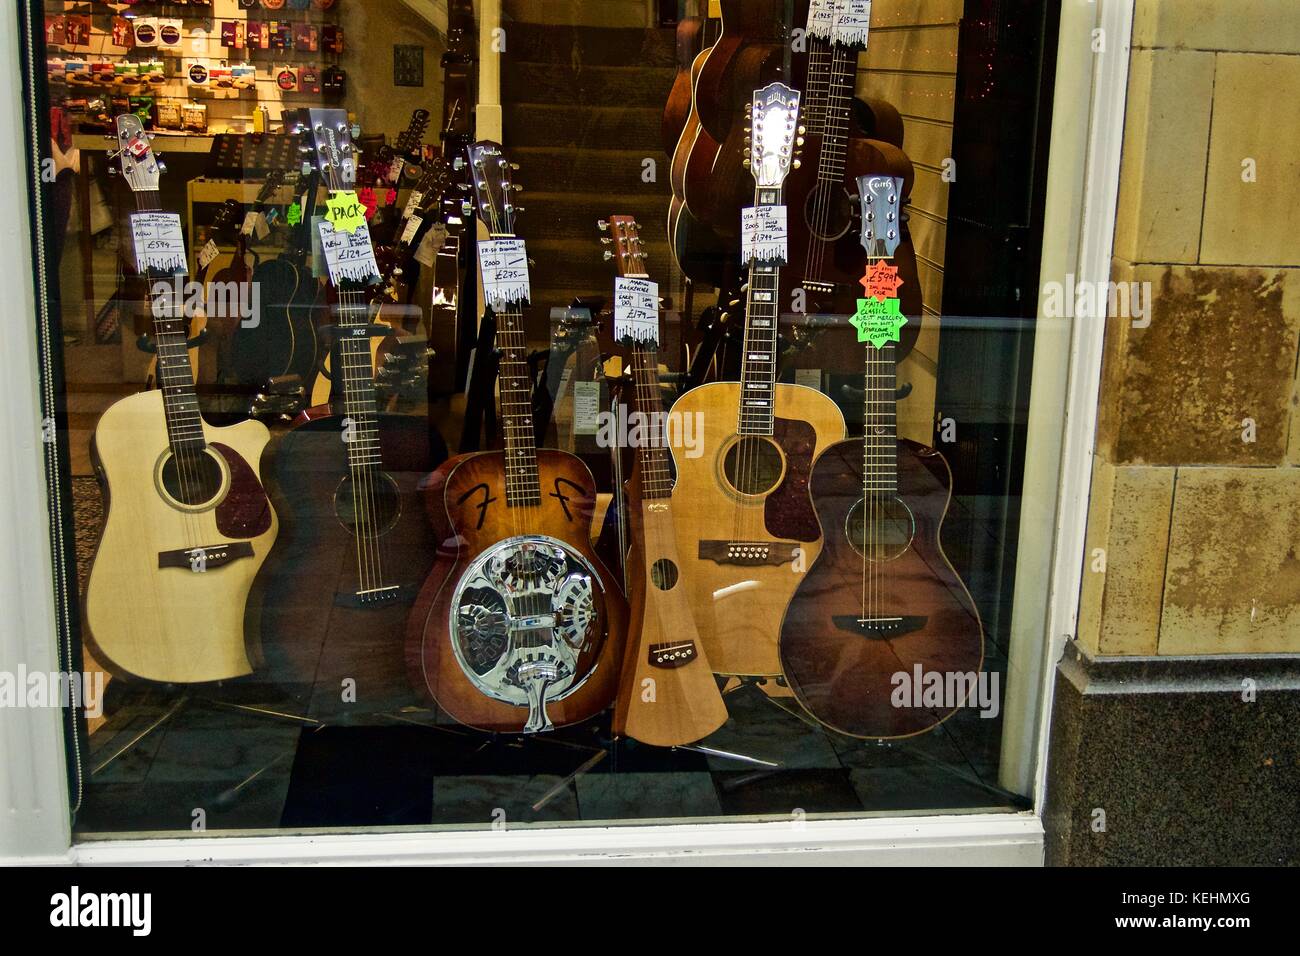 Guitars on sale in shop window, Royal Arcade, Worthing, UK Stock Photo